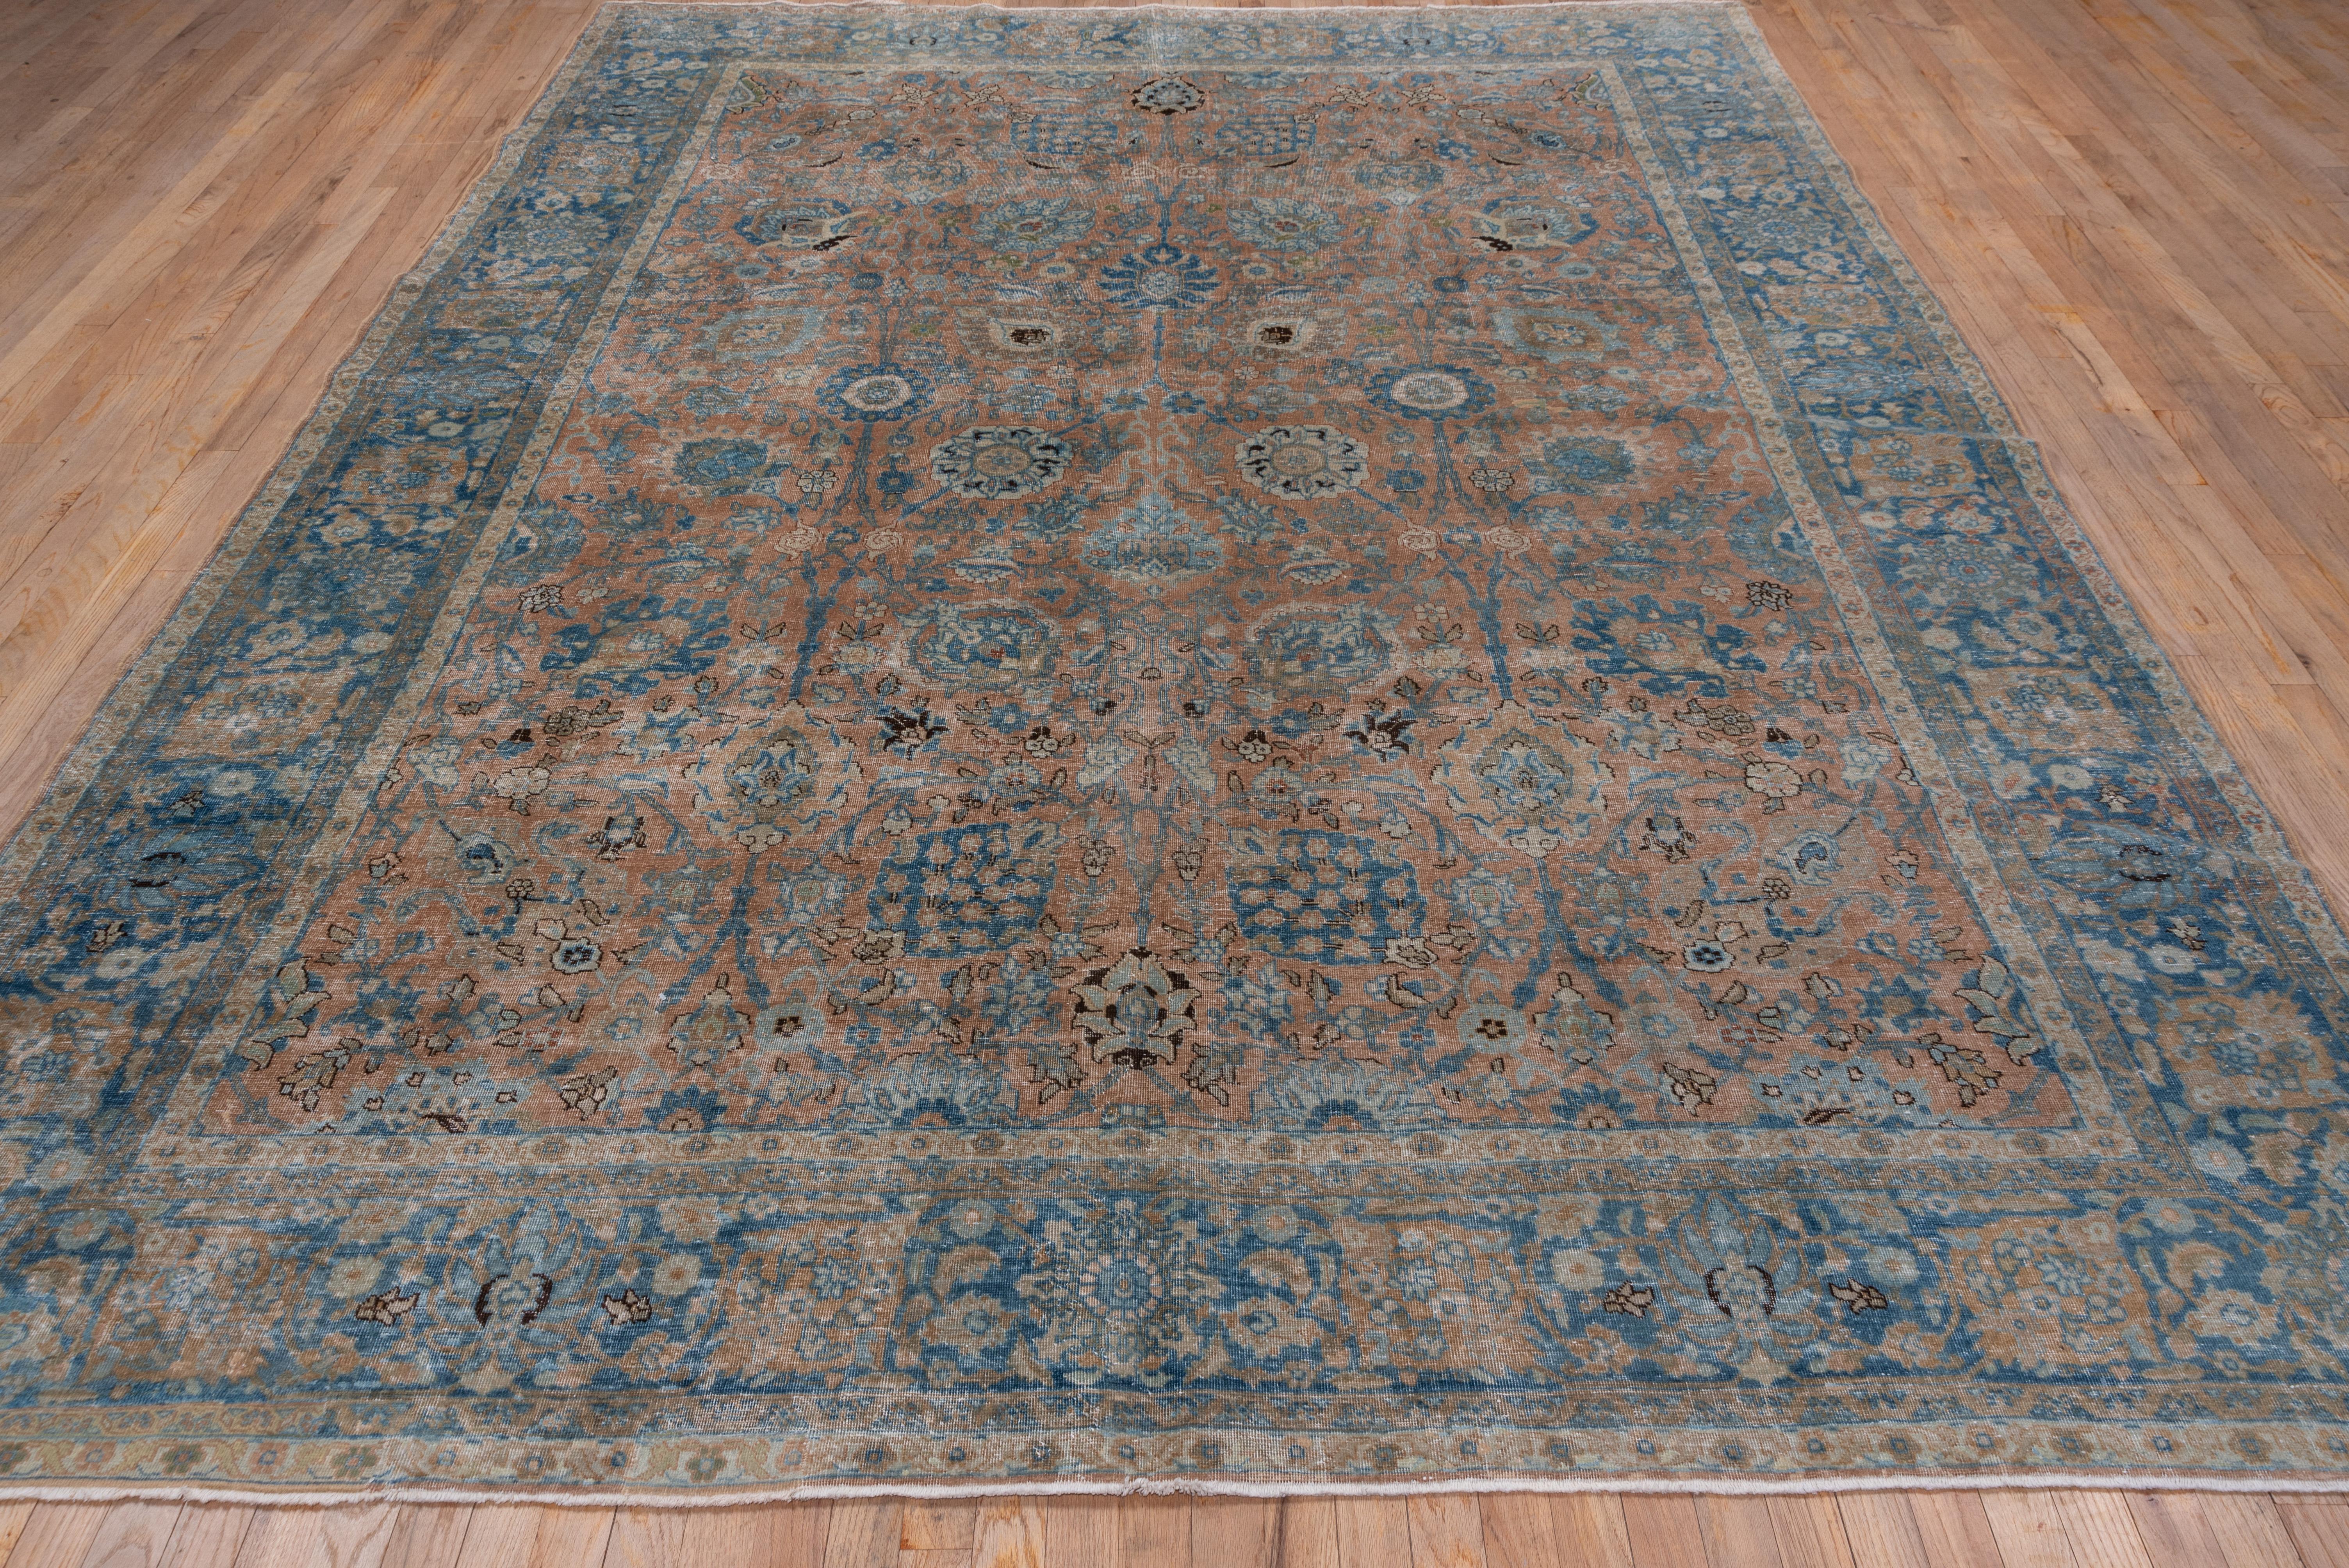 Antique Persian Tabriz Carpet, Peach Field & Blue Borders 1